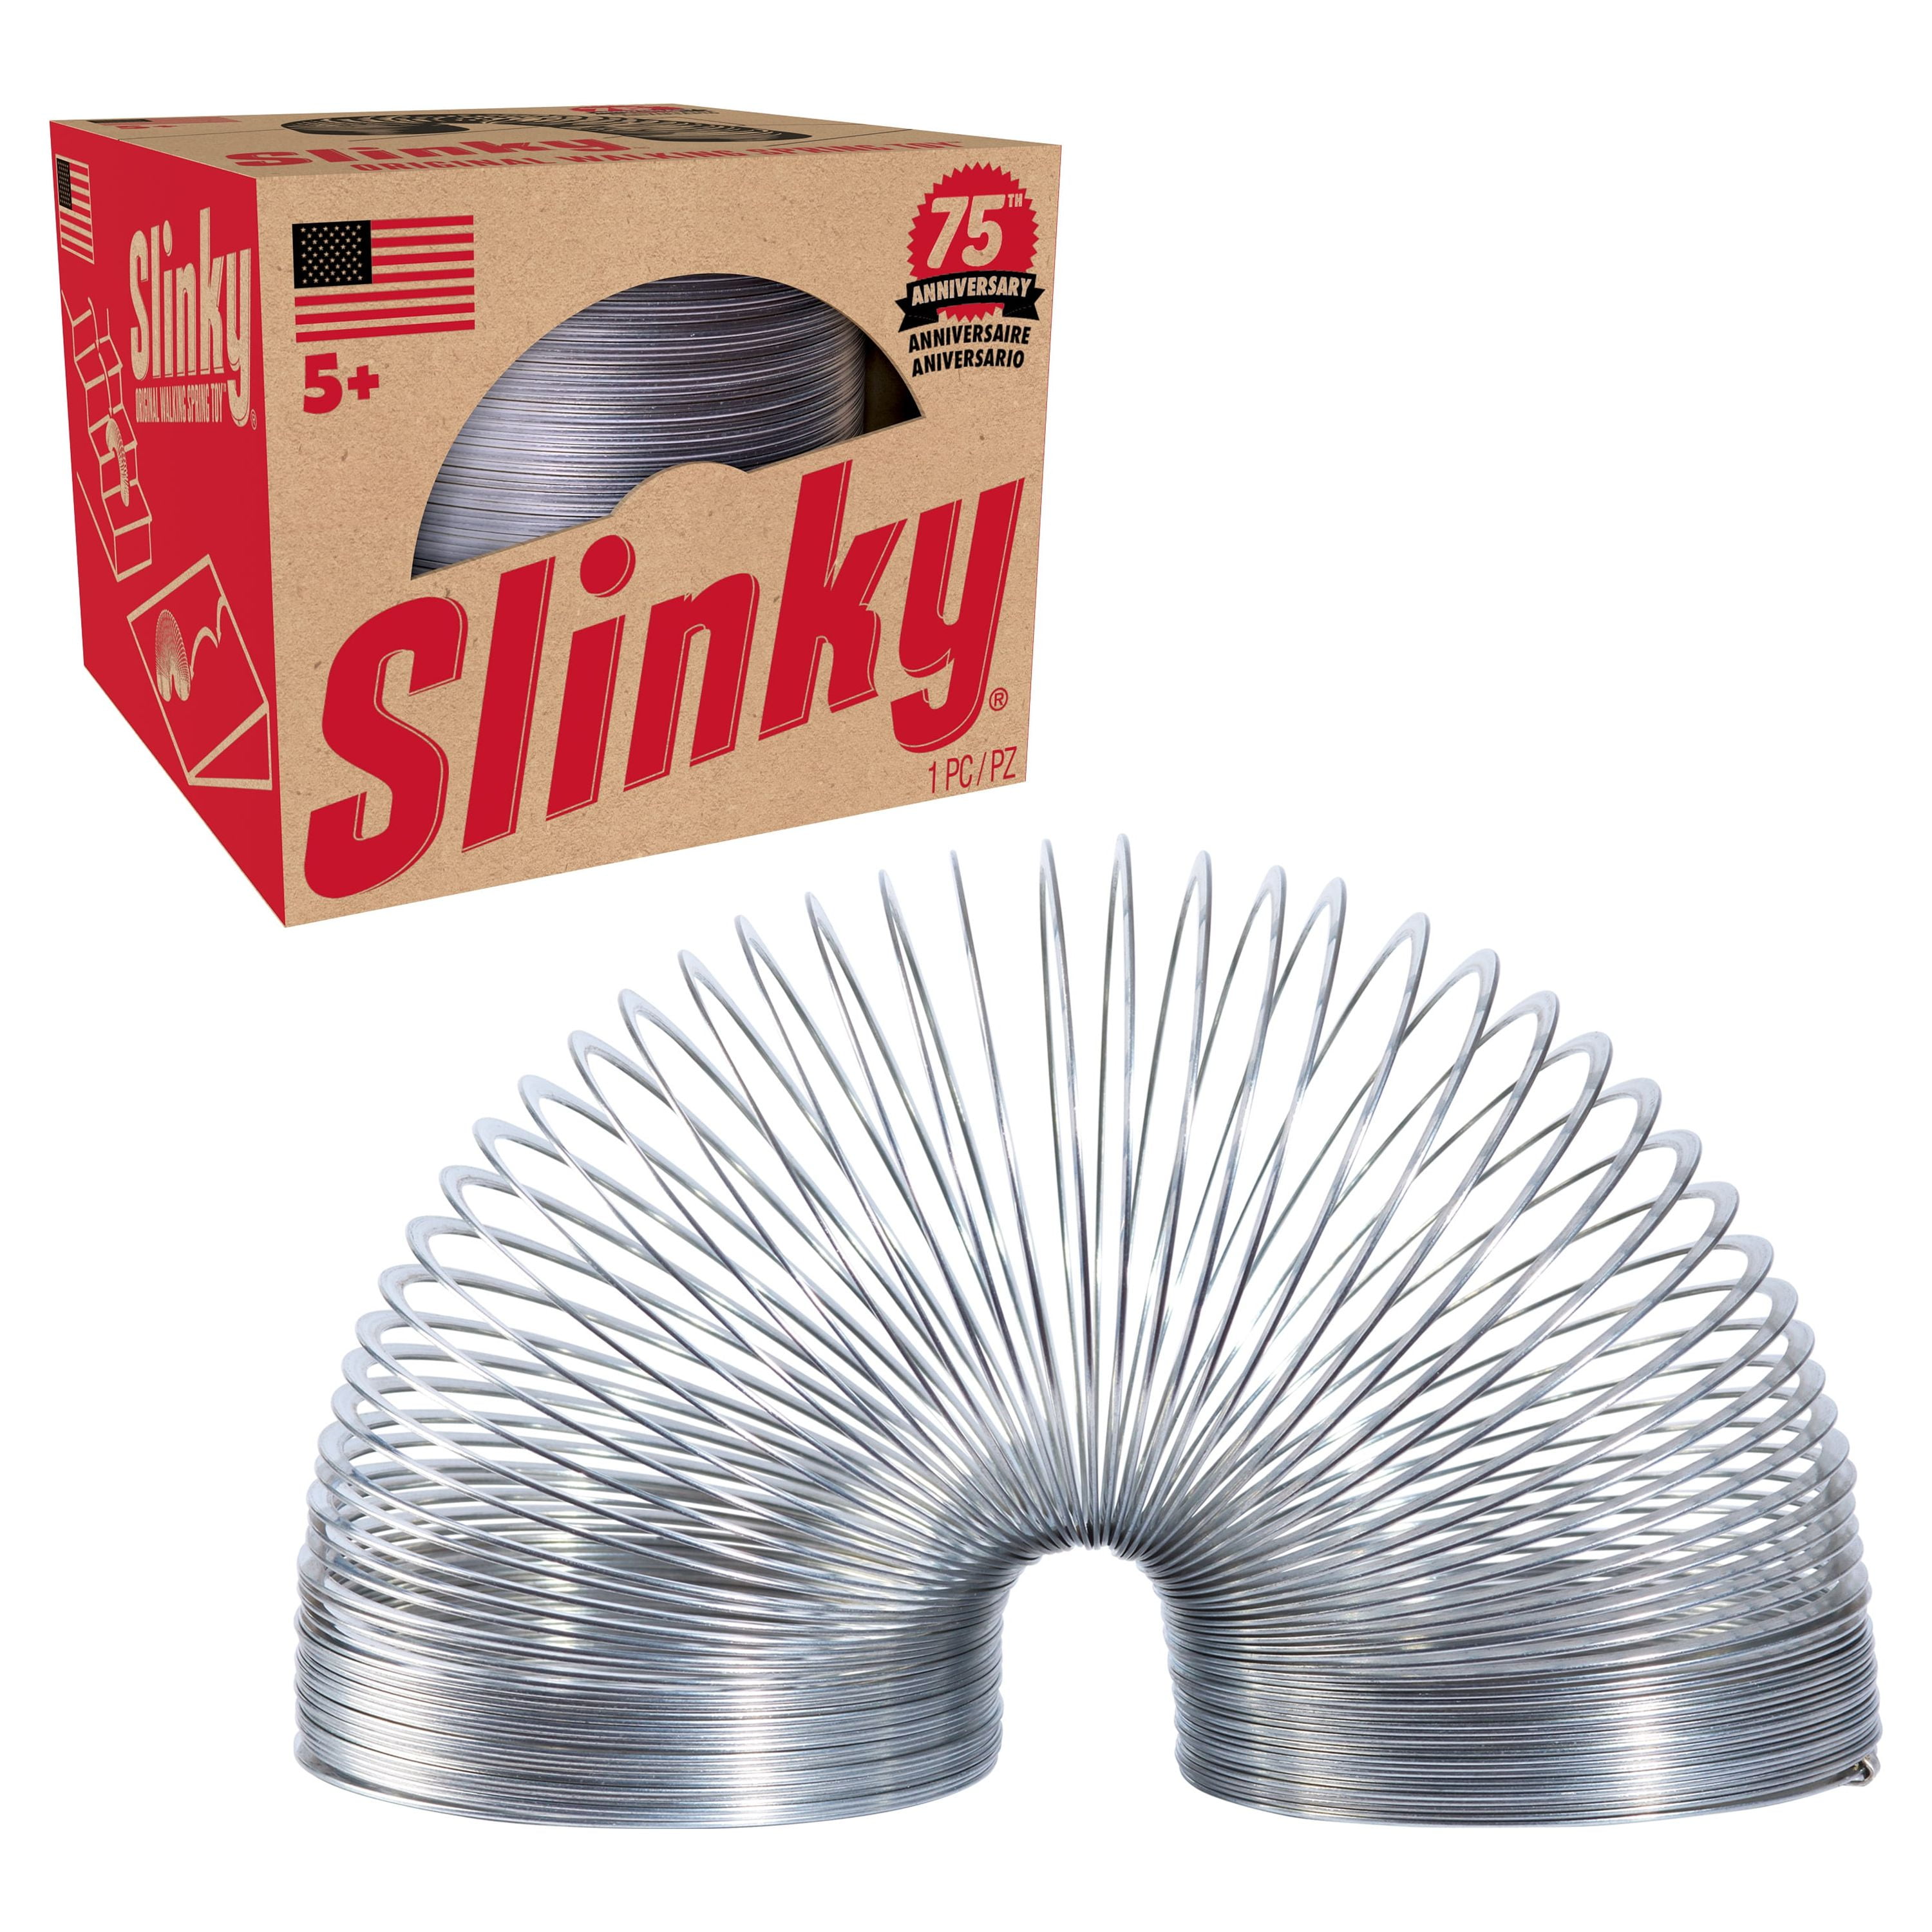 Retro Slinky the Original Walking Spring Toy, Silver Metal Slinky, Ages 5+ $5.76